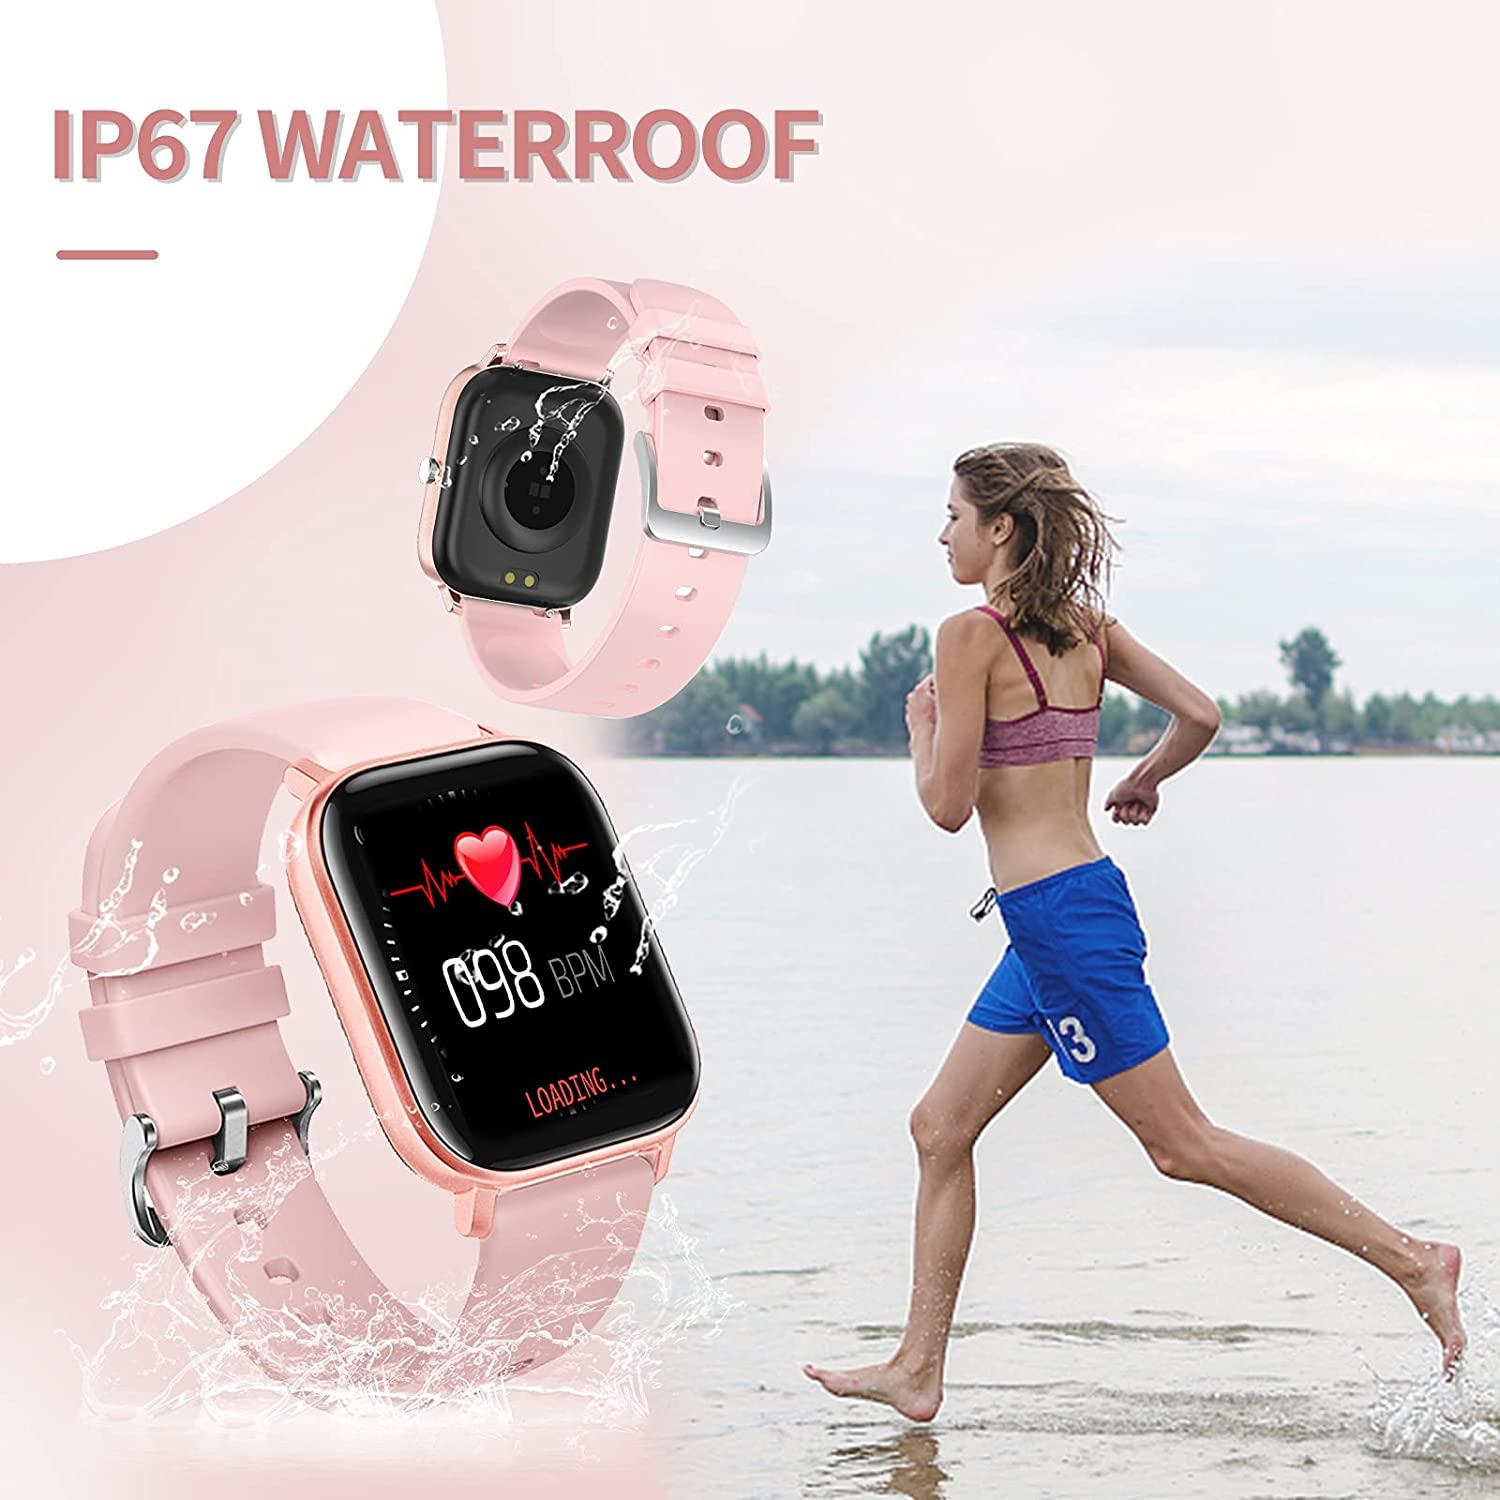 Fitness Tracker - Pedometer & Blood Oxygen Watch - Vive Health